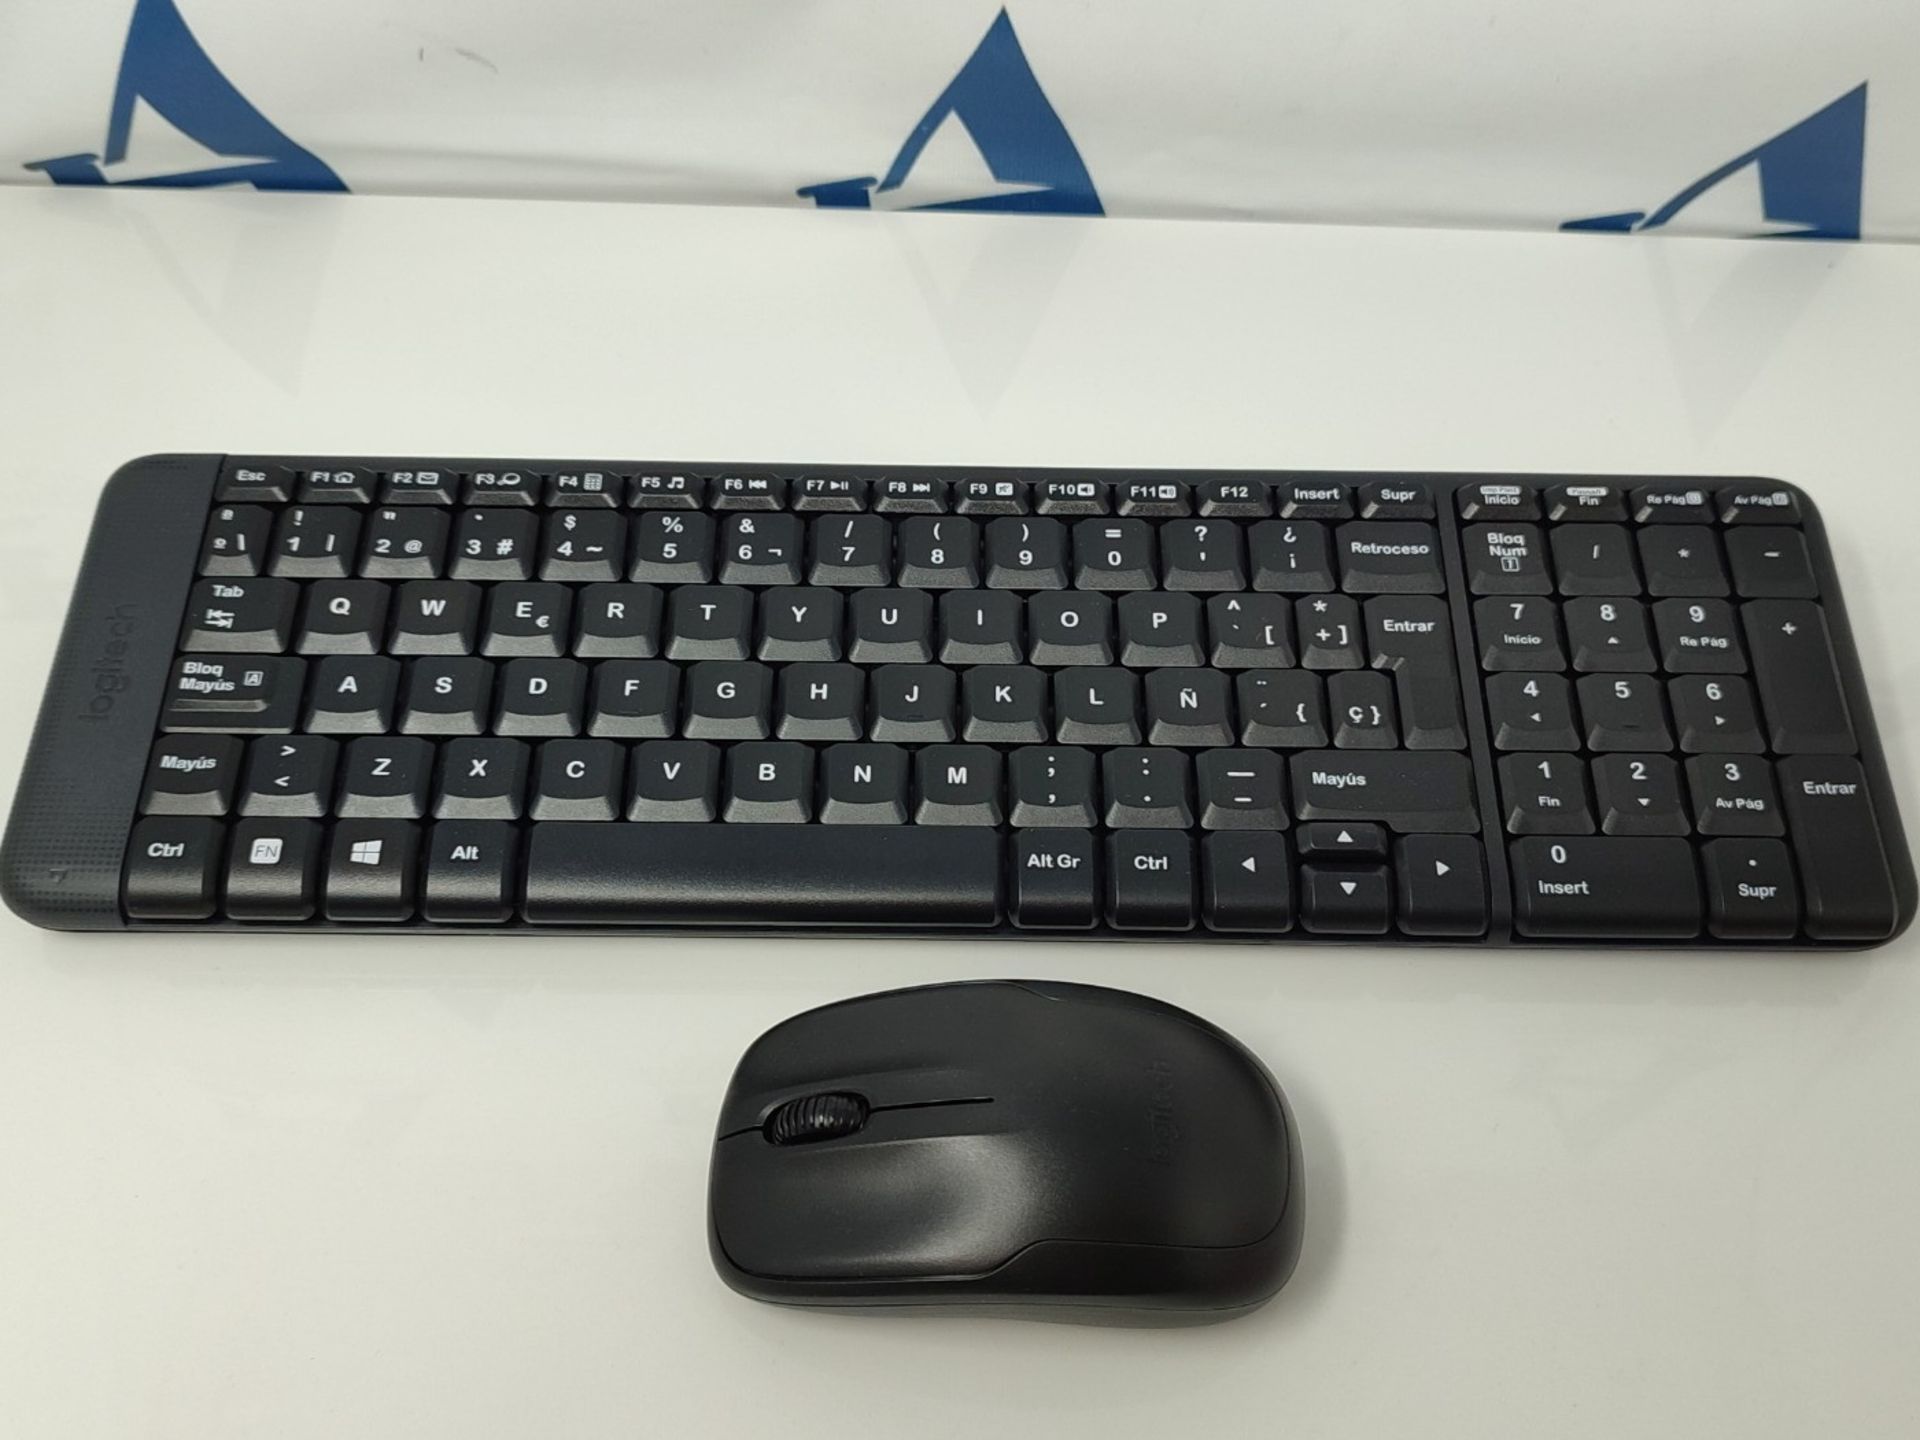 Logitech MK220 Compact Wireless Keyboard and Mouse Combo, QWERTY Spanish Layout - Blac - Image 3 of 3